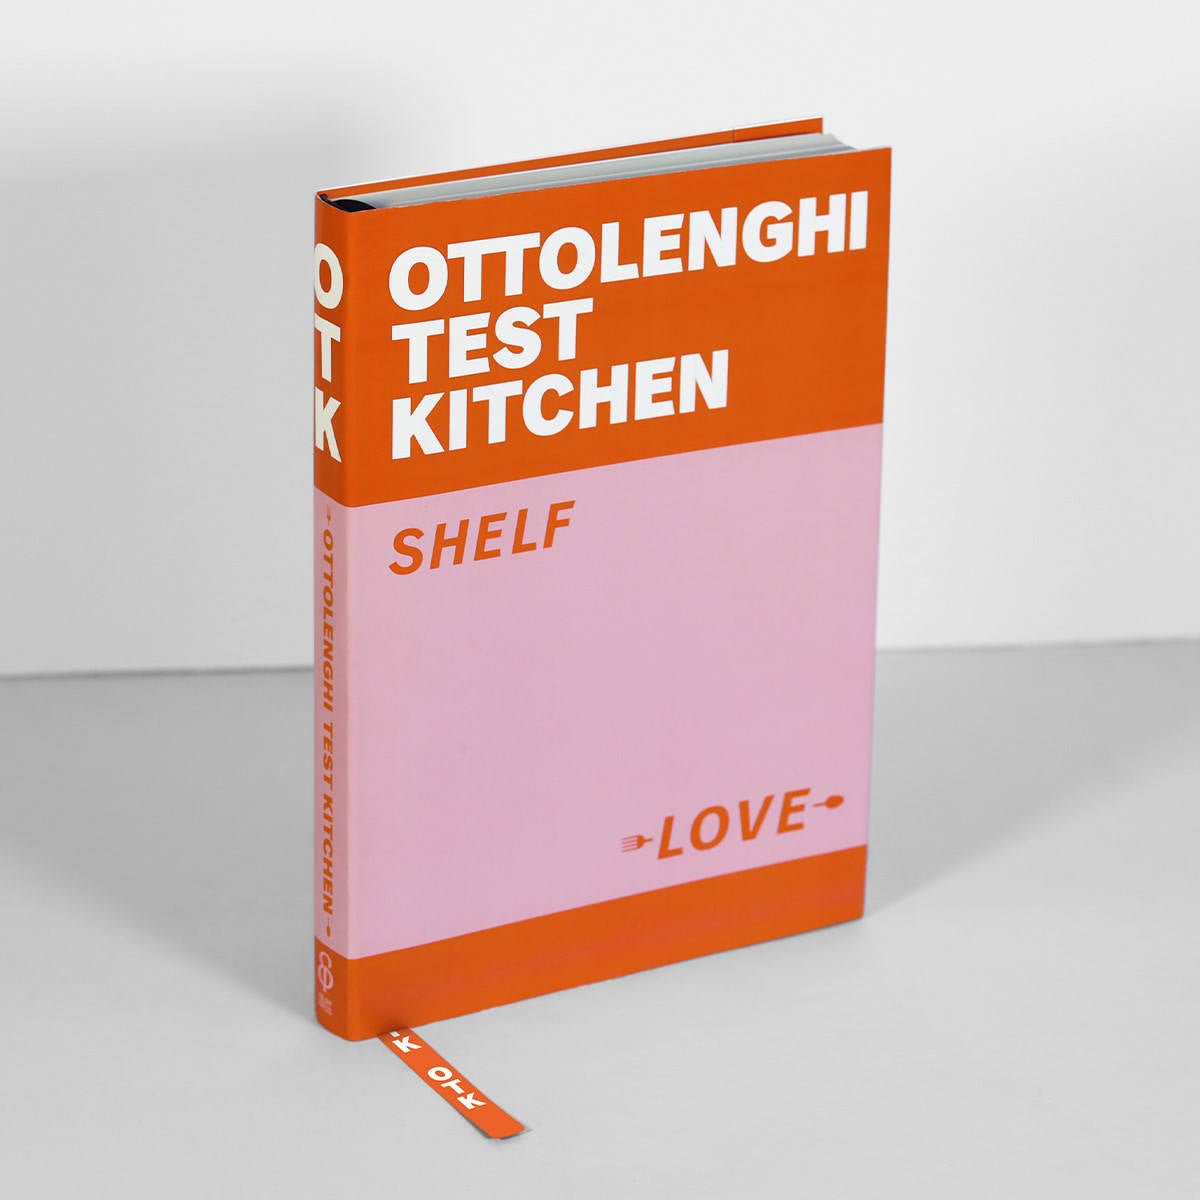 booktopia + Ottolenghi Test Kitchen